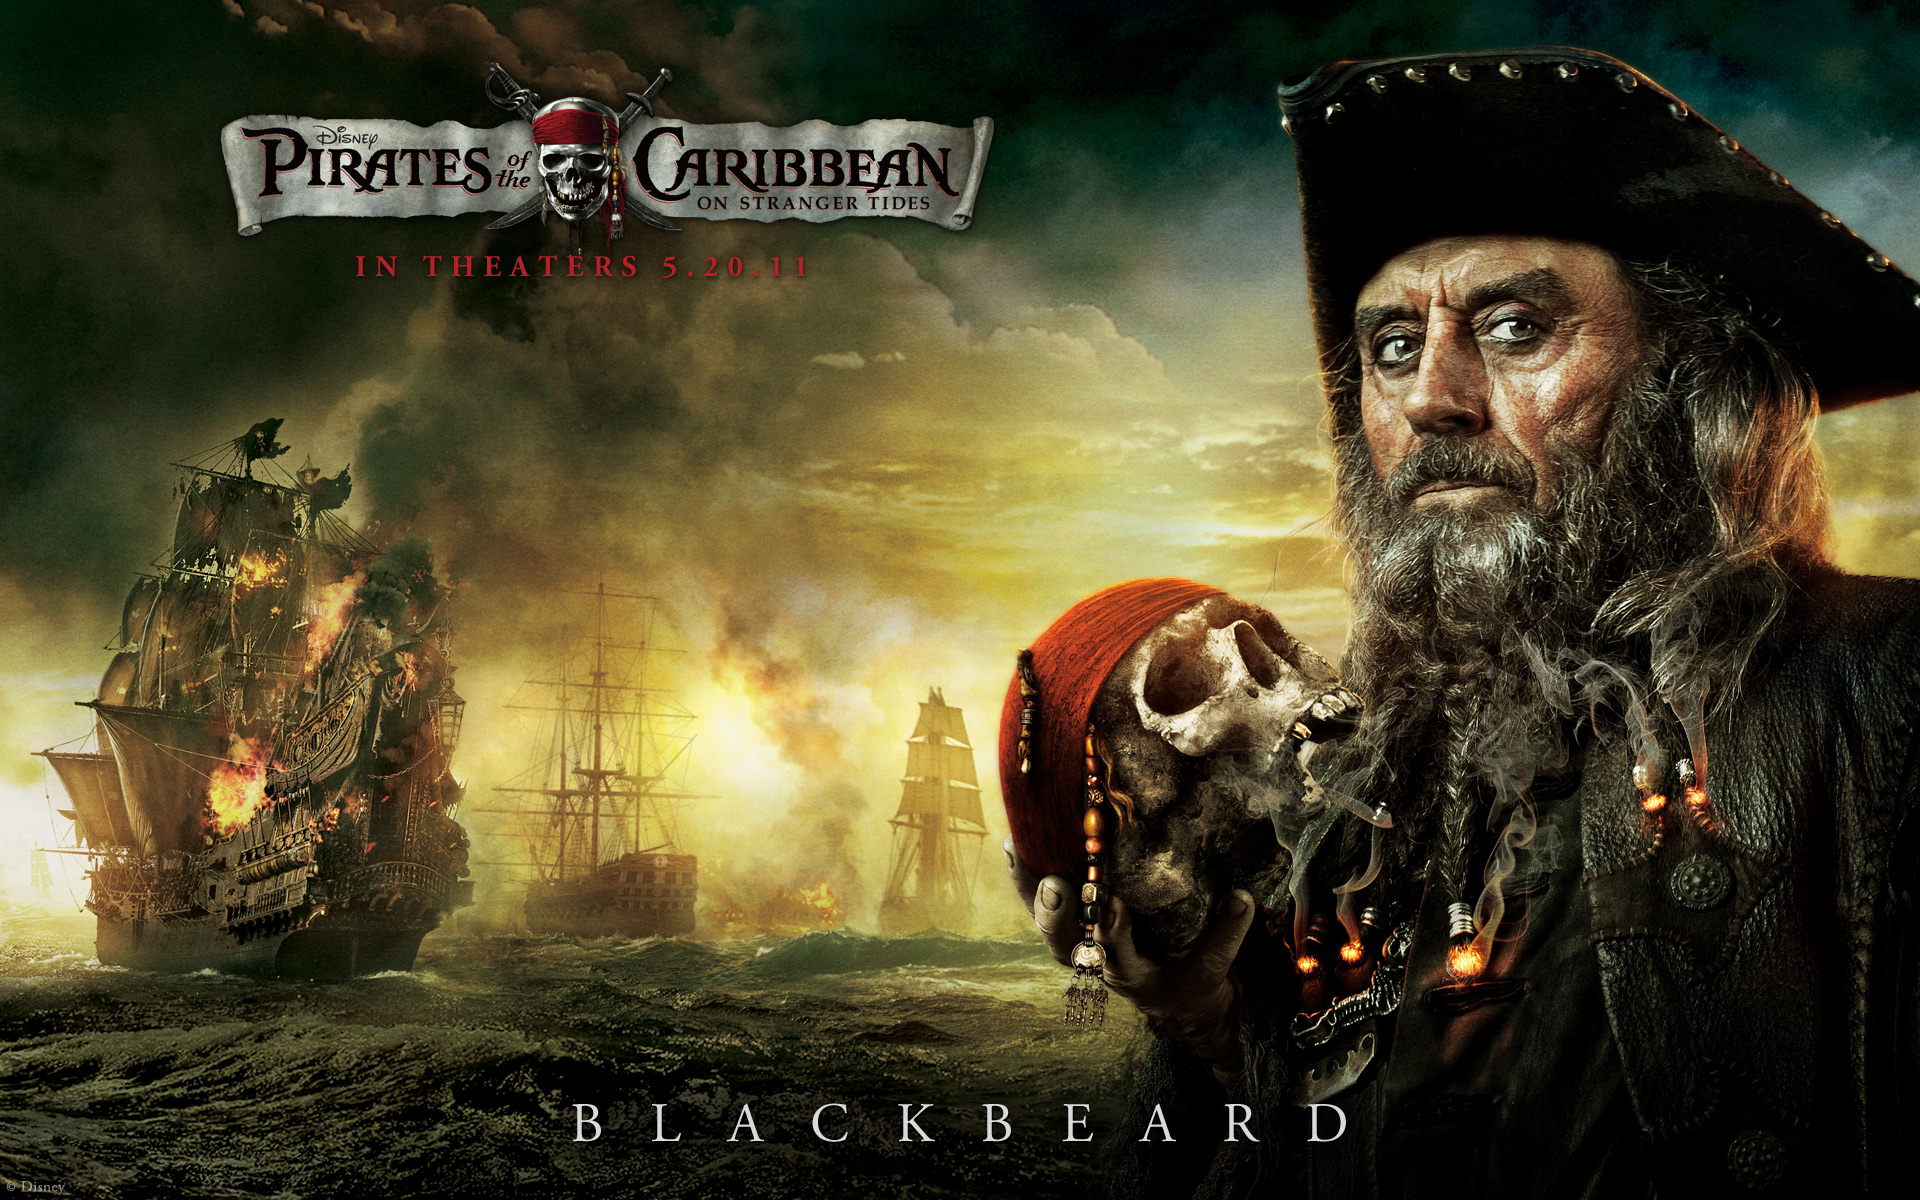 Blackbeard from Pirates of the Caribbean Desktop Wallpaper